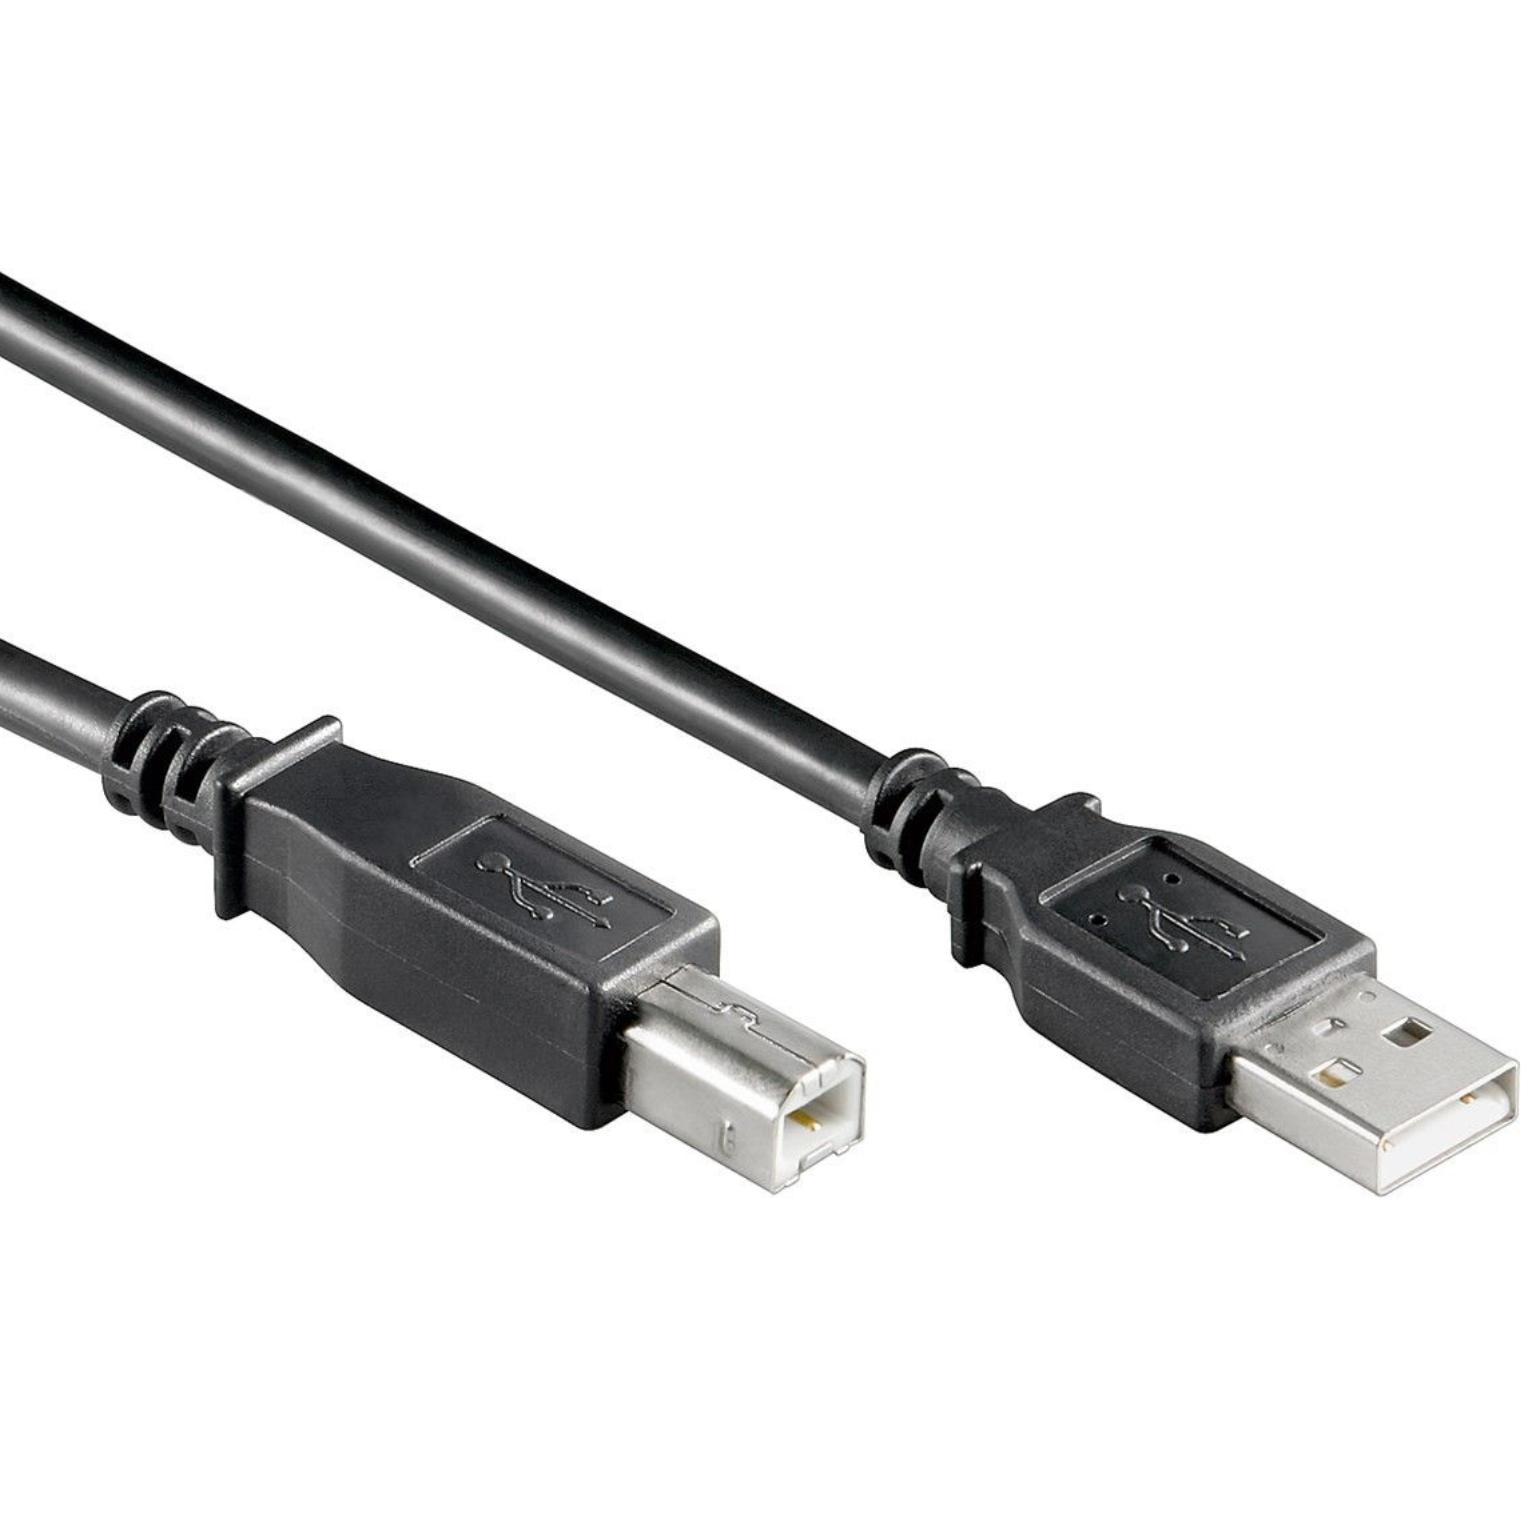 USB-B datakabel - 0.25 meter - Allteq